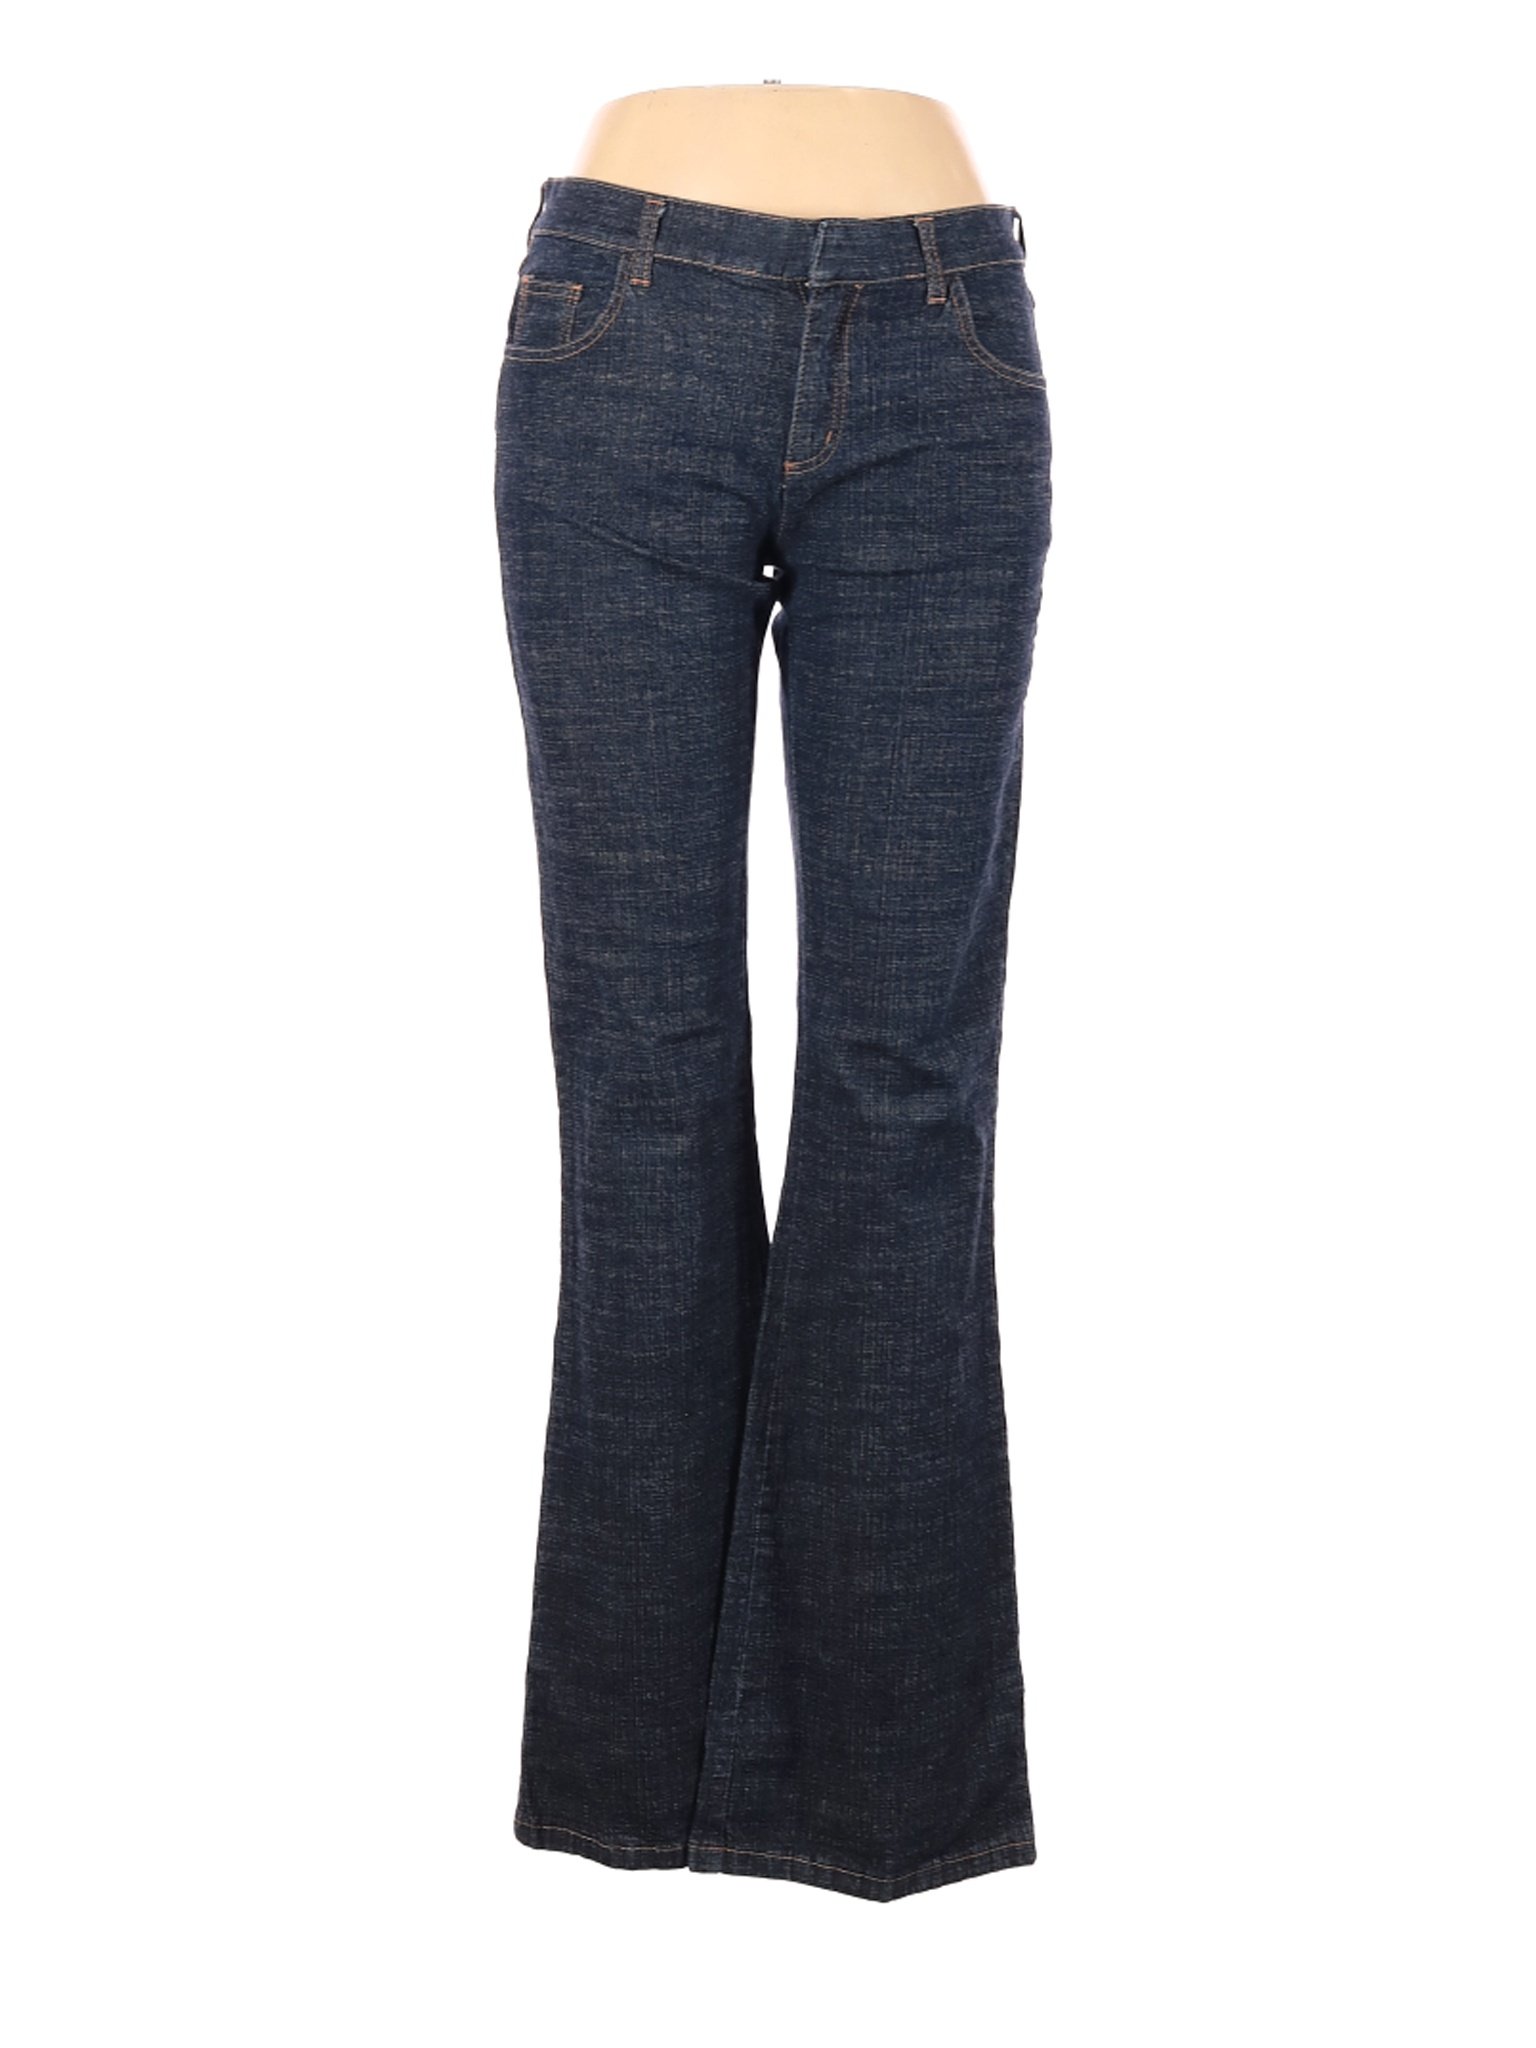 Kenneth Cole New York Women Blue Jeans 12 | eBay